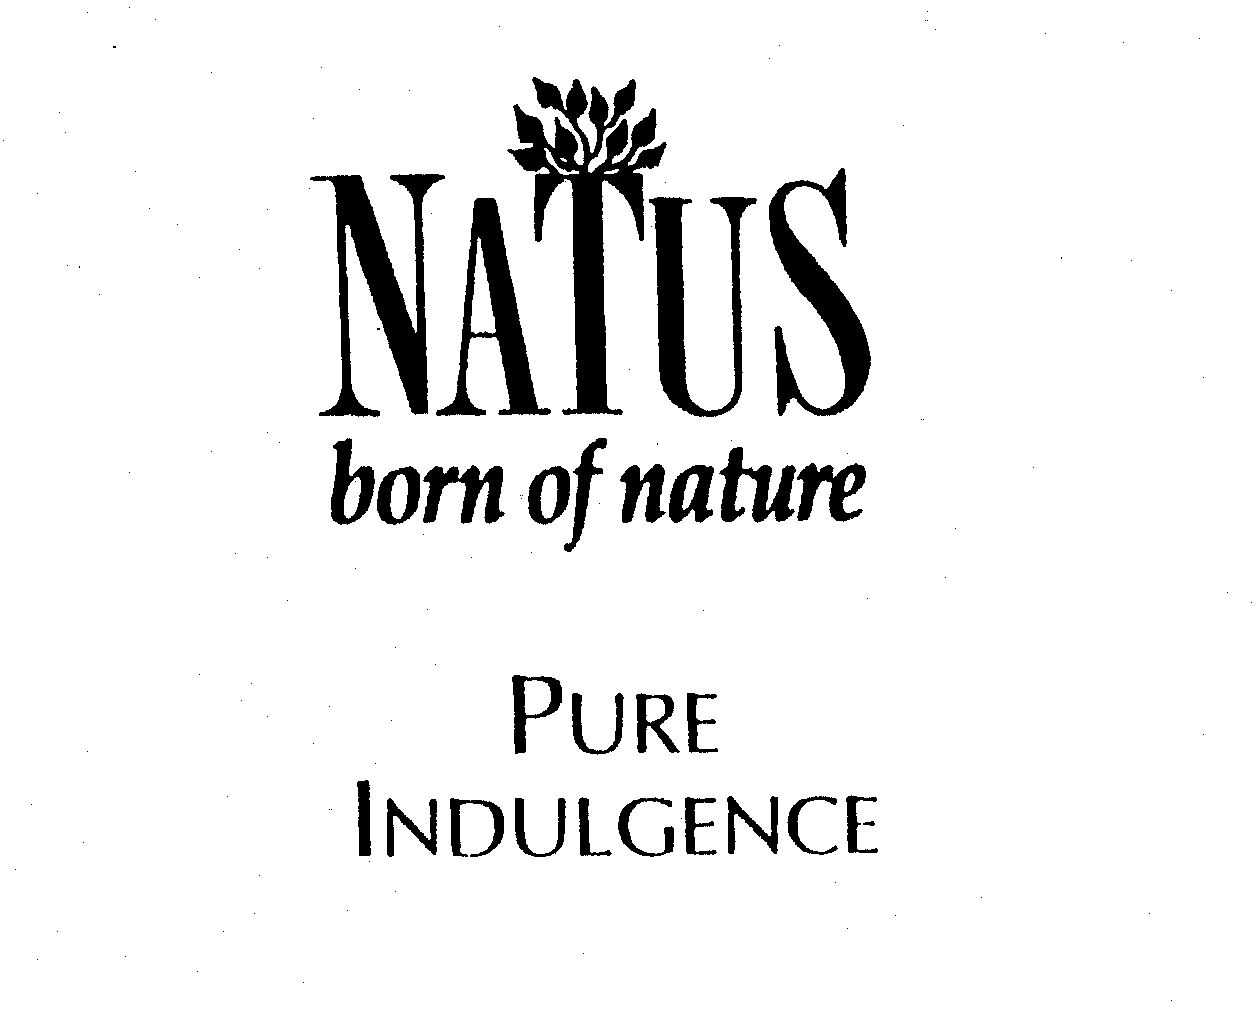  NATUS BORN OF NATURE PURE INDULGENCE